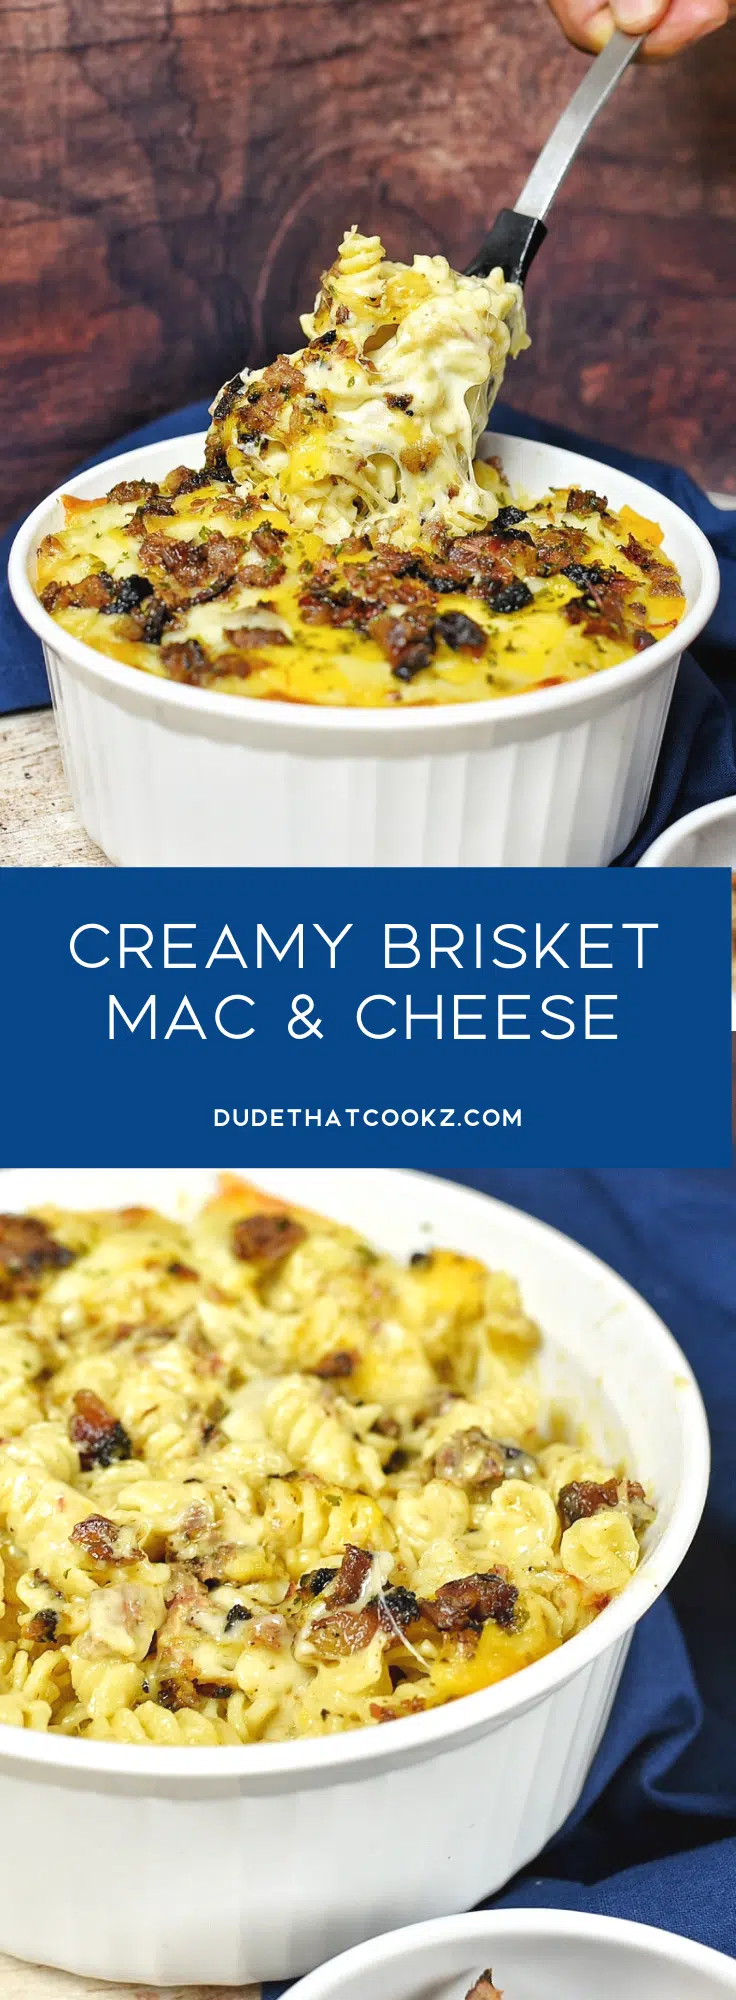 brisket mac and cheese